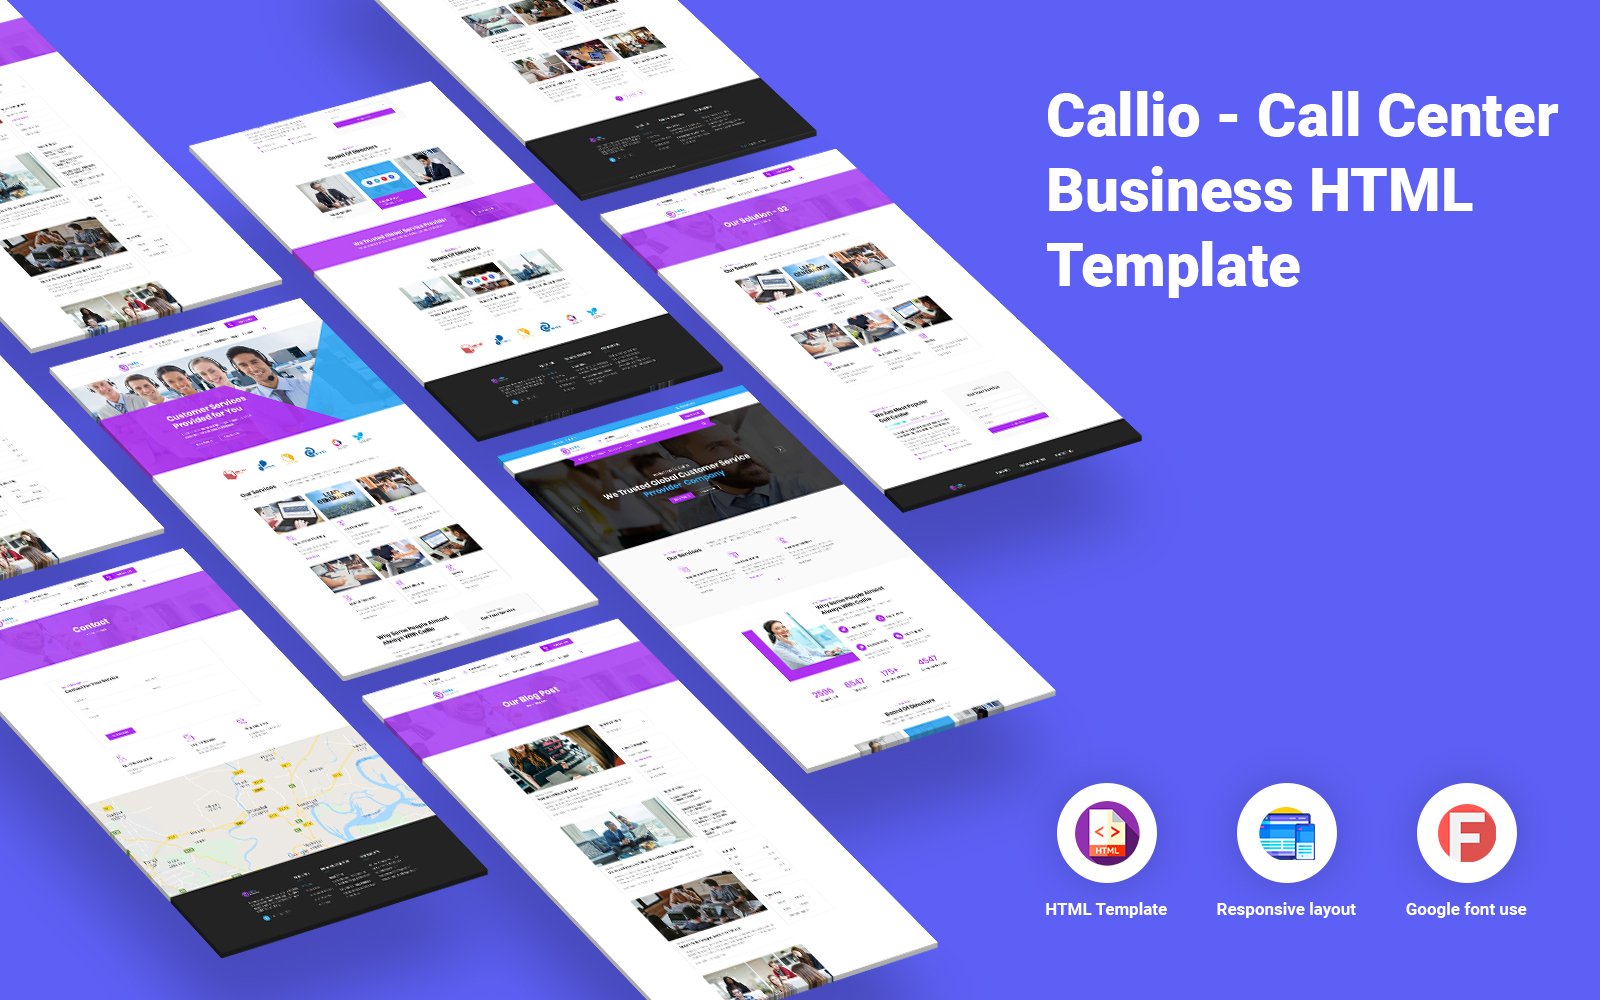 Callio - Call Center Business Website Template